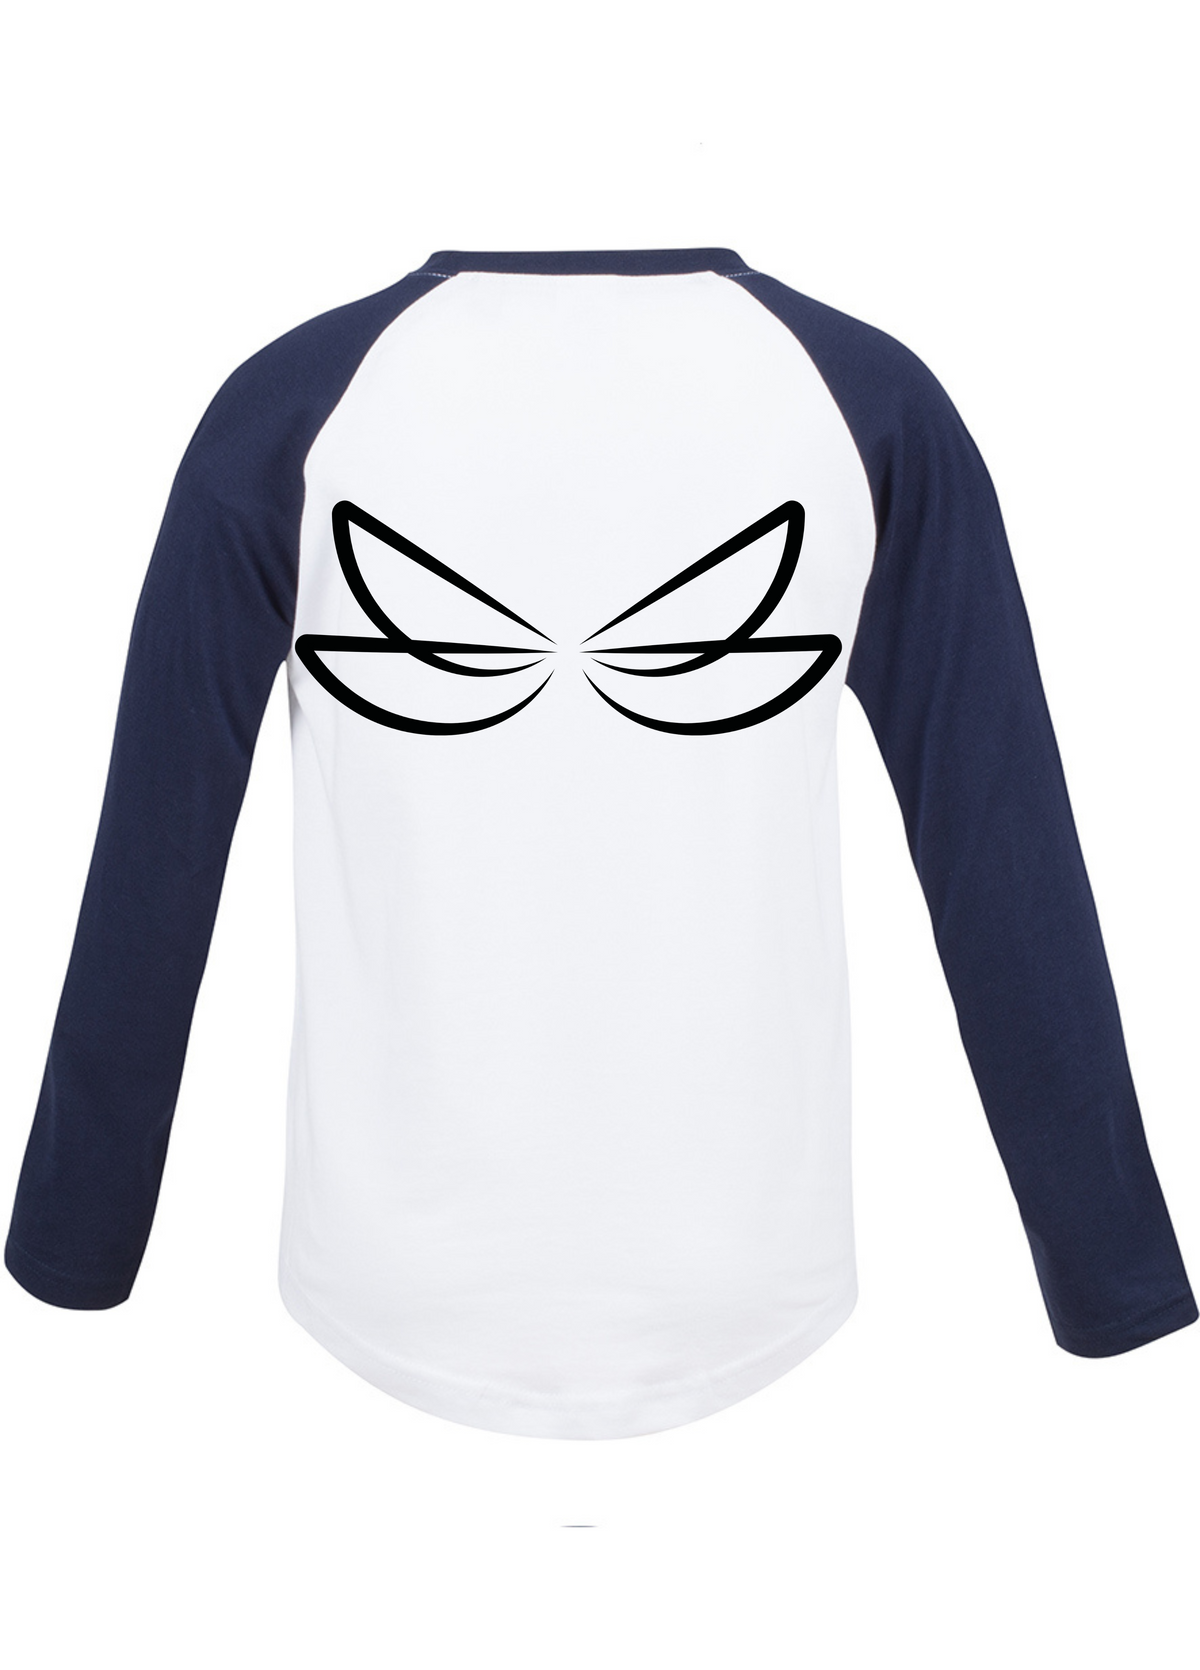 Baseball Long Sleeve T-shirt Blue and white - Dragonfly Leotards - Children's Sportswear